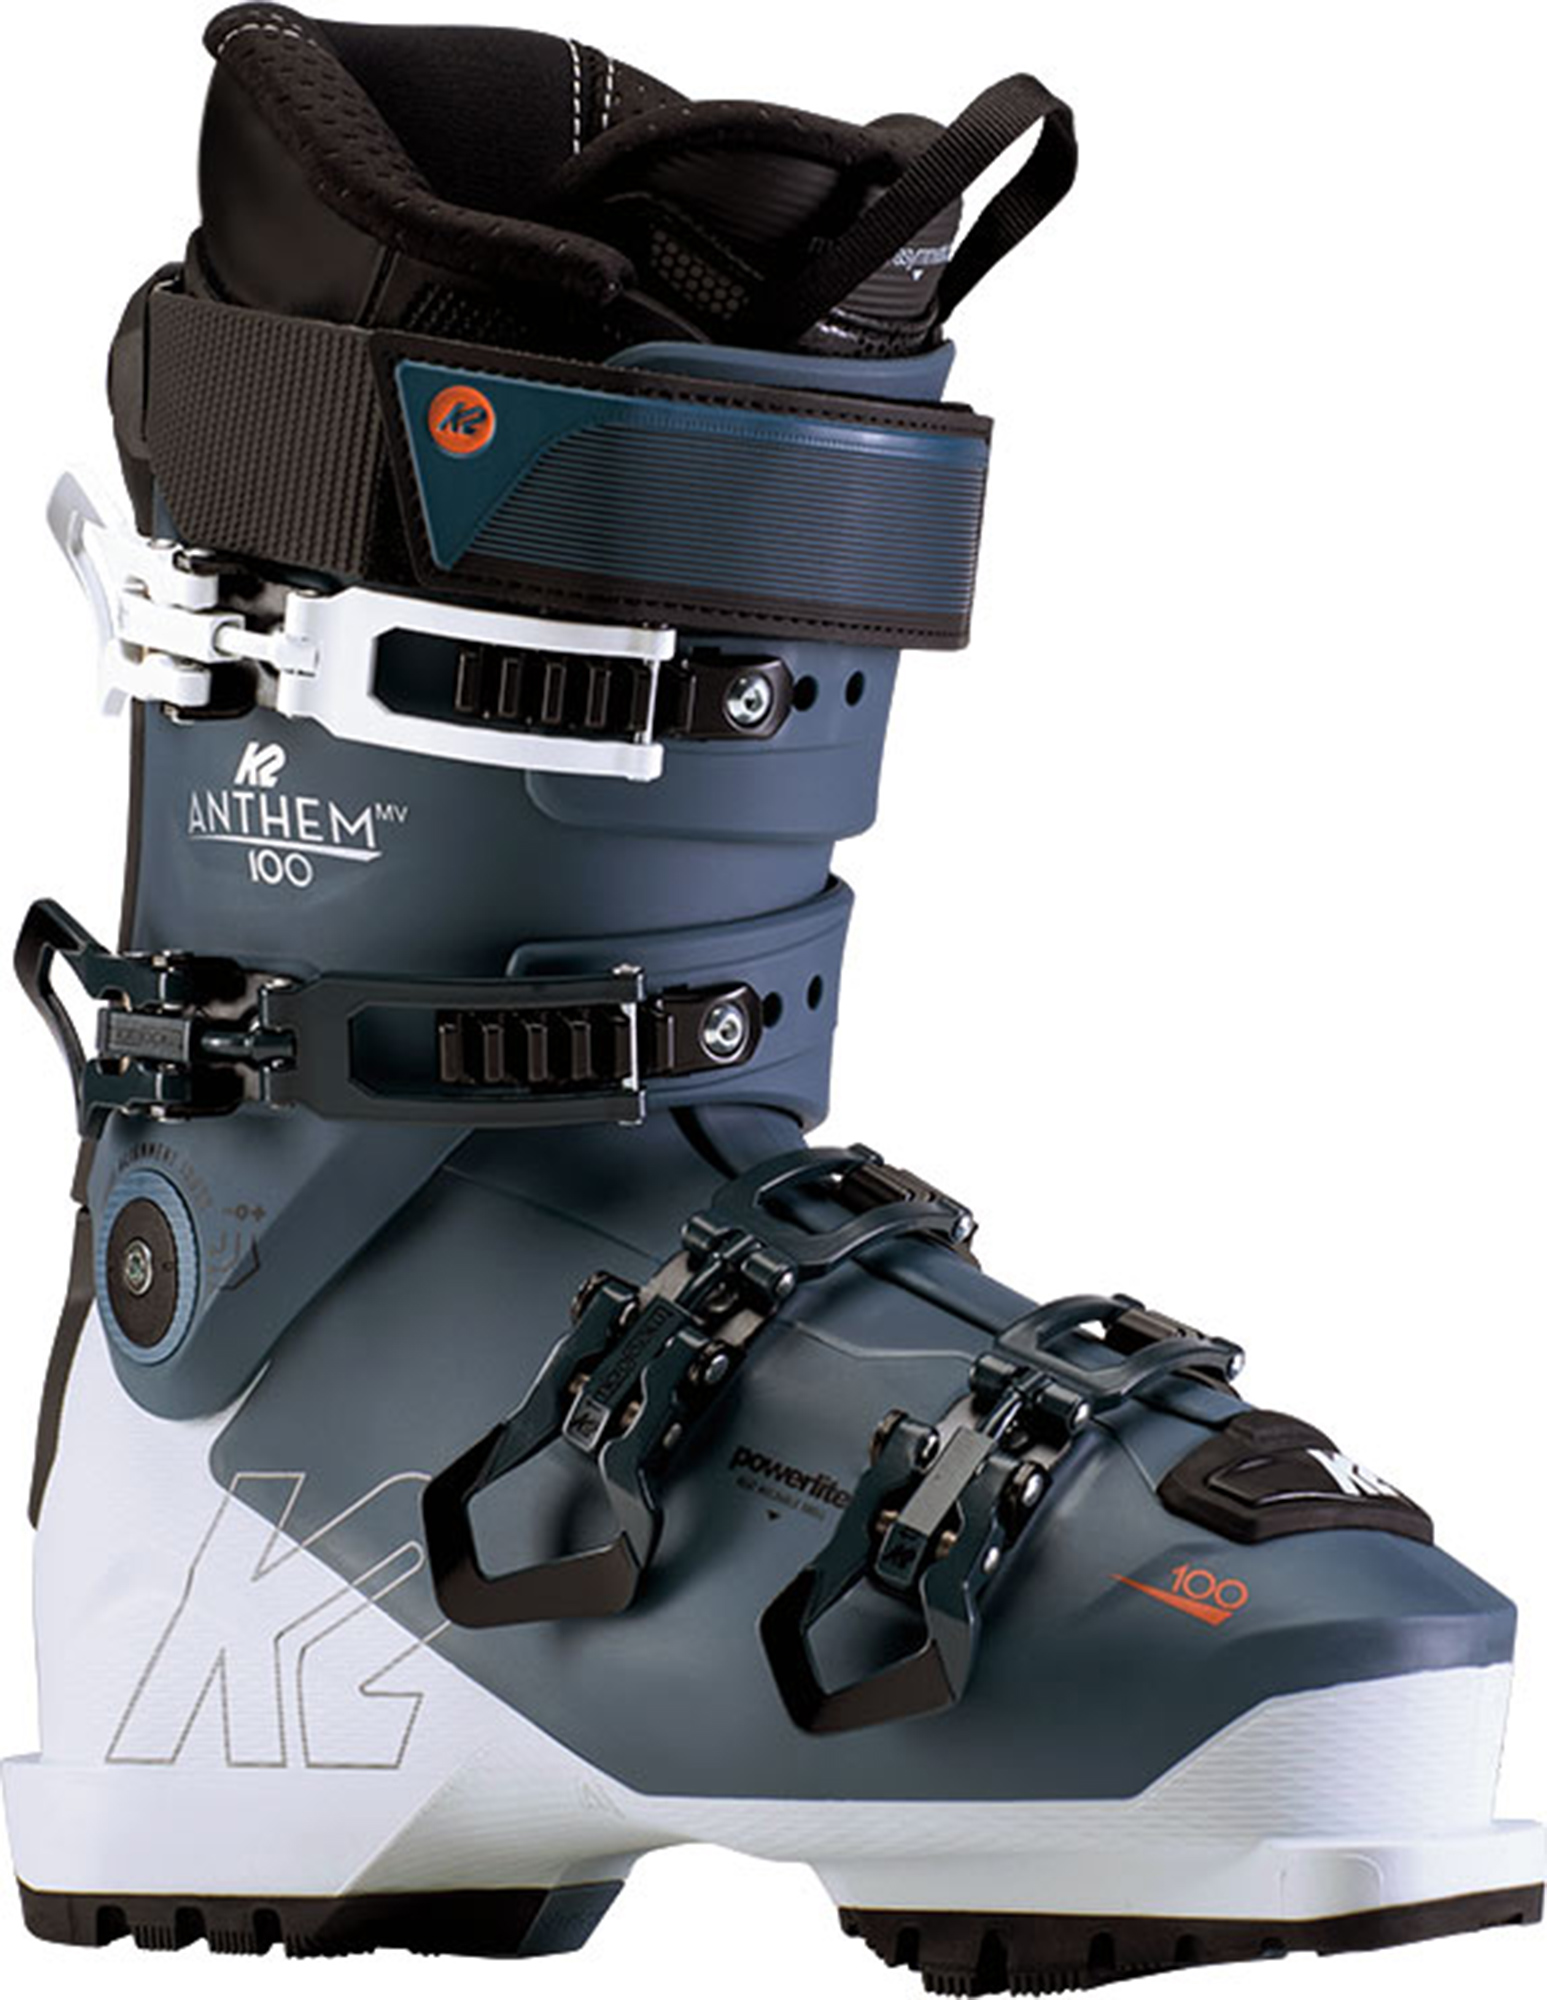 K2 Anthem 100 LV Ski Boot 2020 | Mount Everest